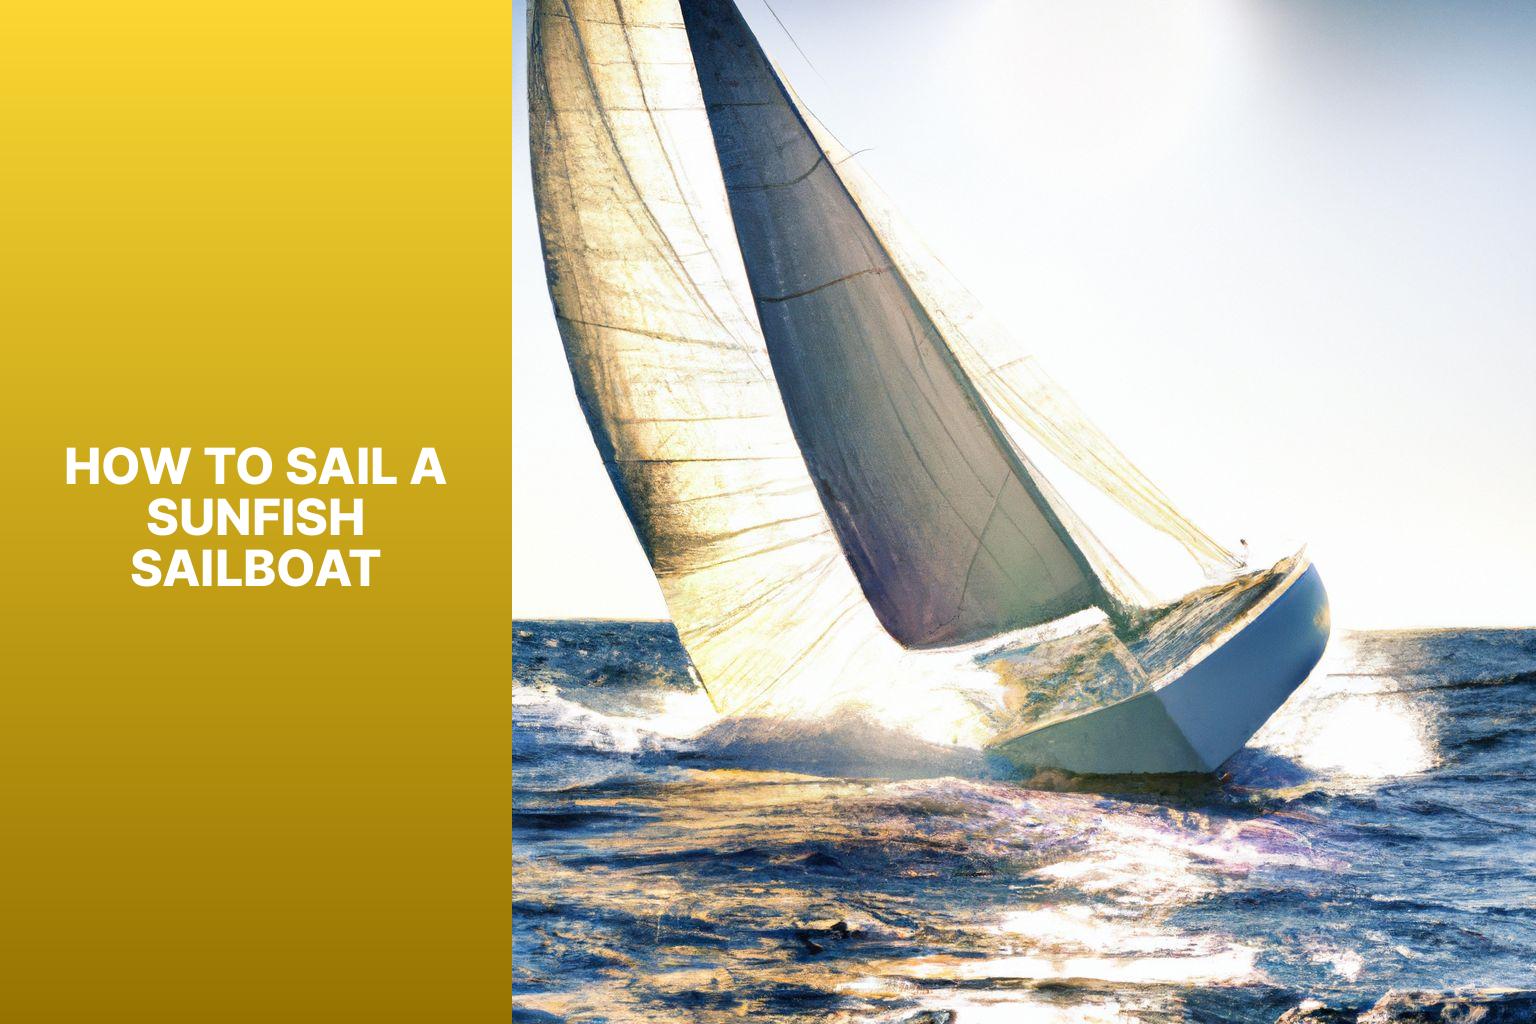 sunfish sailboat maximum speed